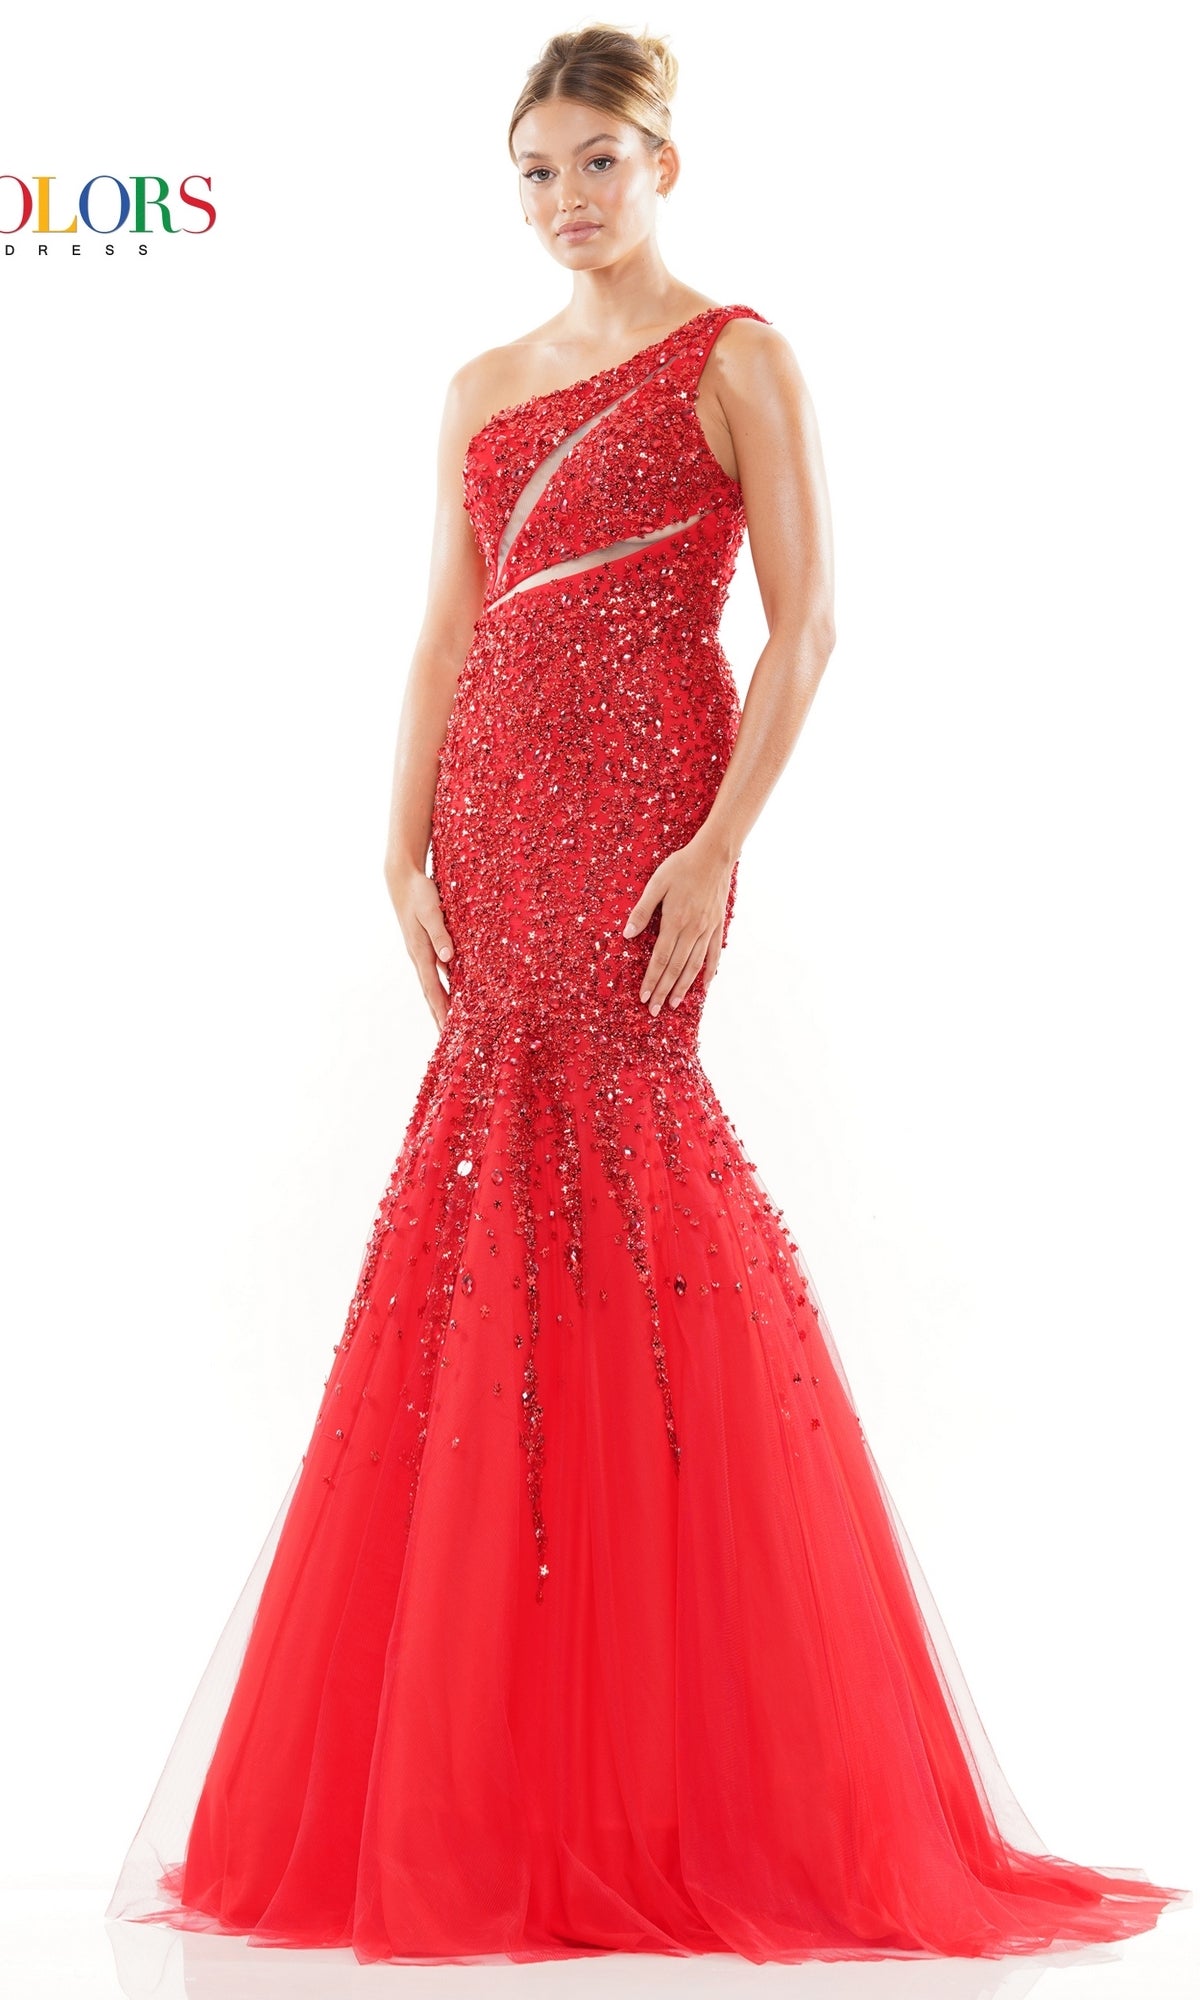 Colors Dress Mermaid Prom Dress 3193